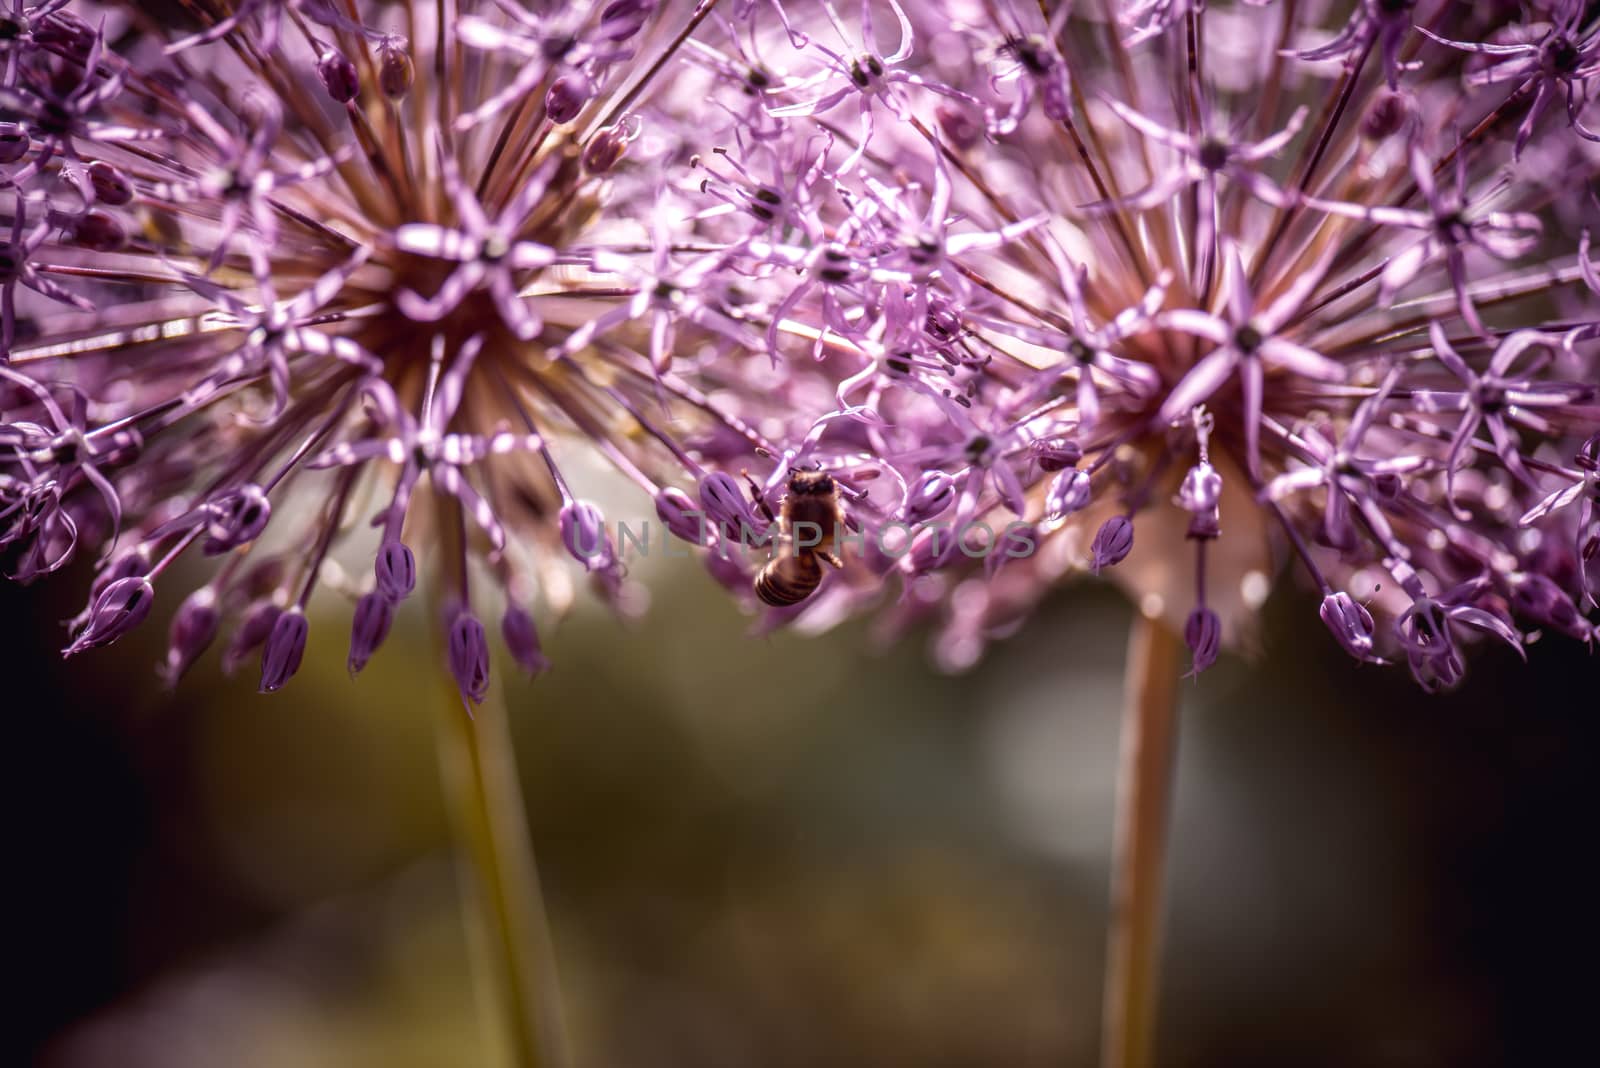 Bee collecting nectar on purple alum garlic flower. macro close-up by skrotov